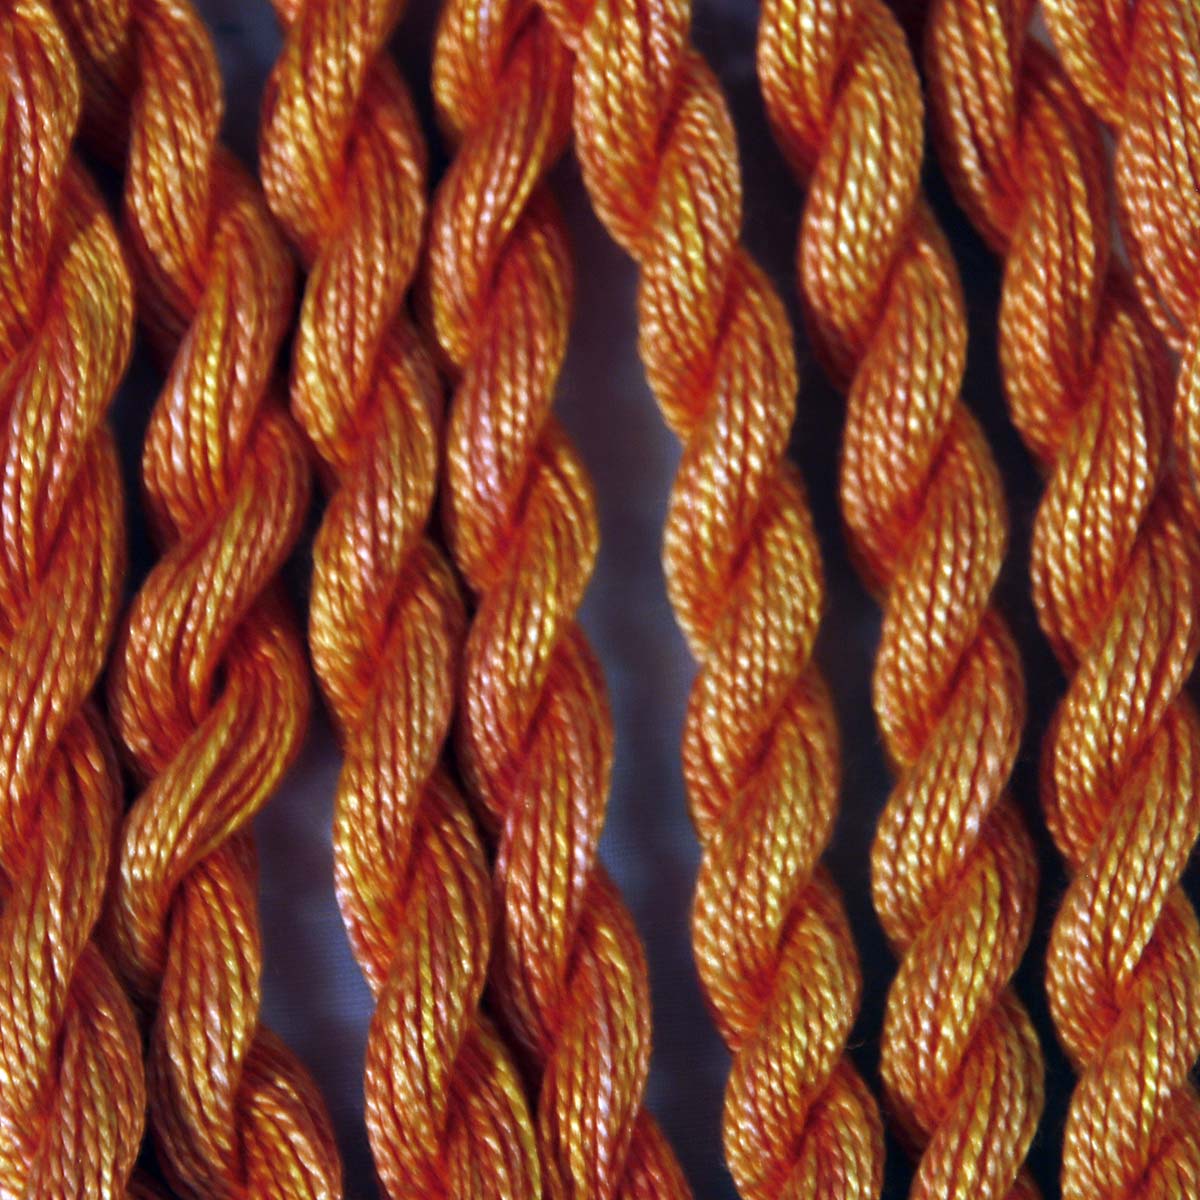 www.colourstreams.com.au Colour Streams Hand Dyed Cotton Threads Cotto Strands Slow Stitch Embroidery Textile Arts Fibre DL  20 Nasturtium Oranges